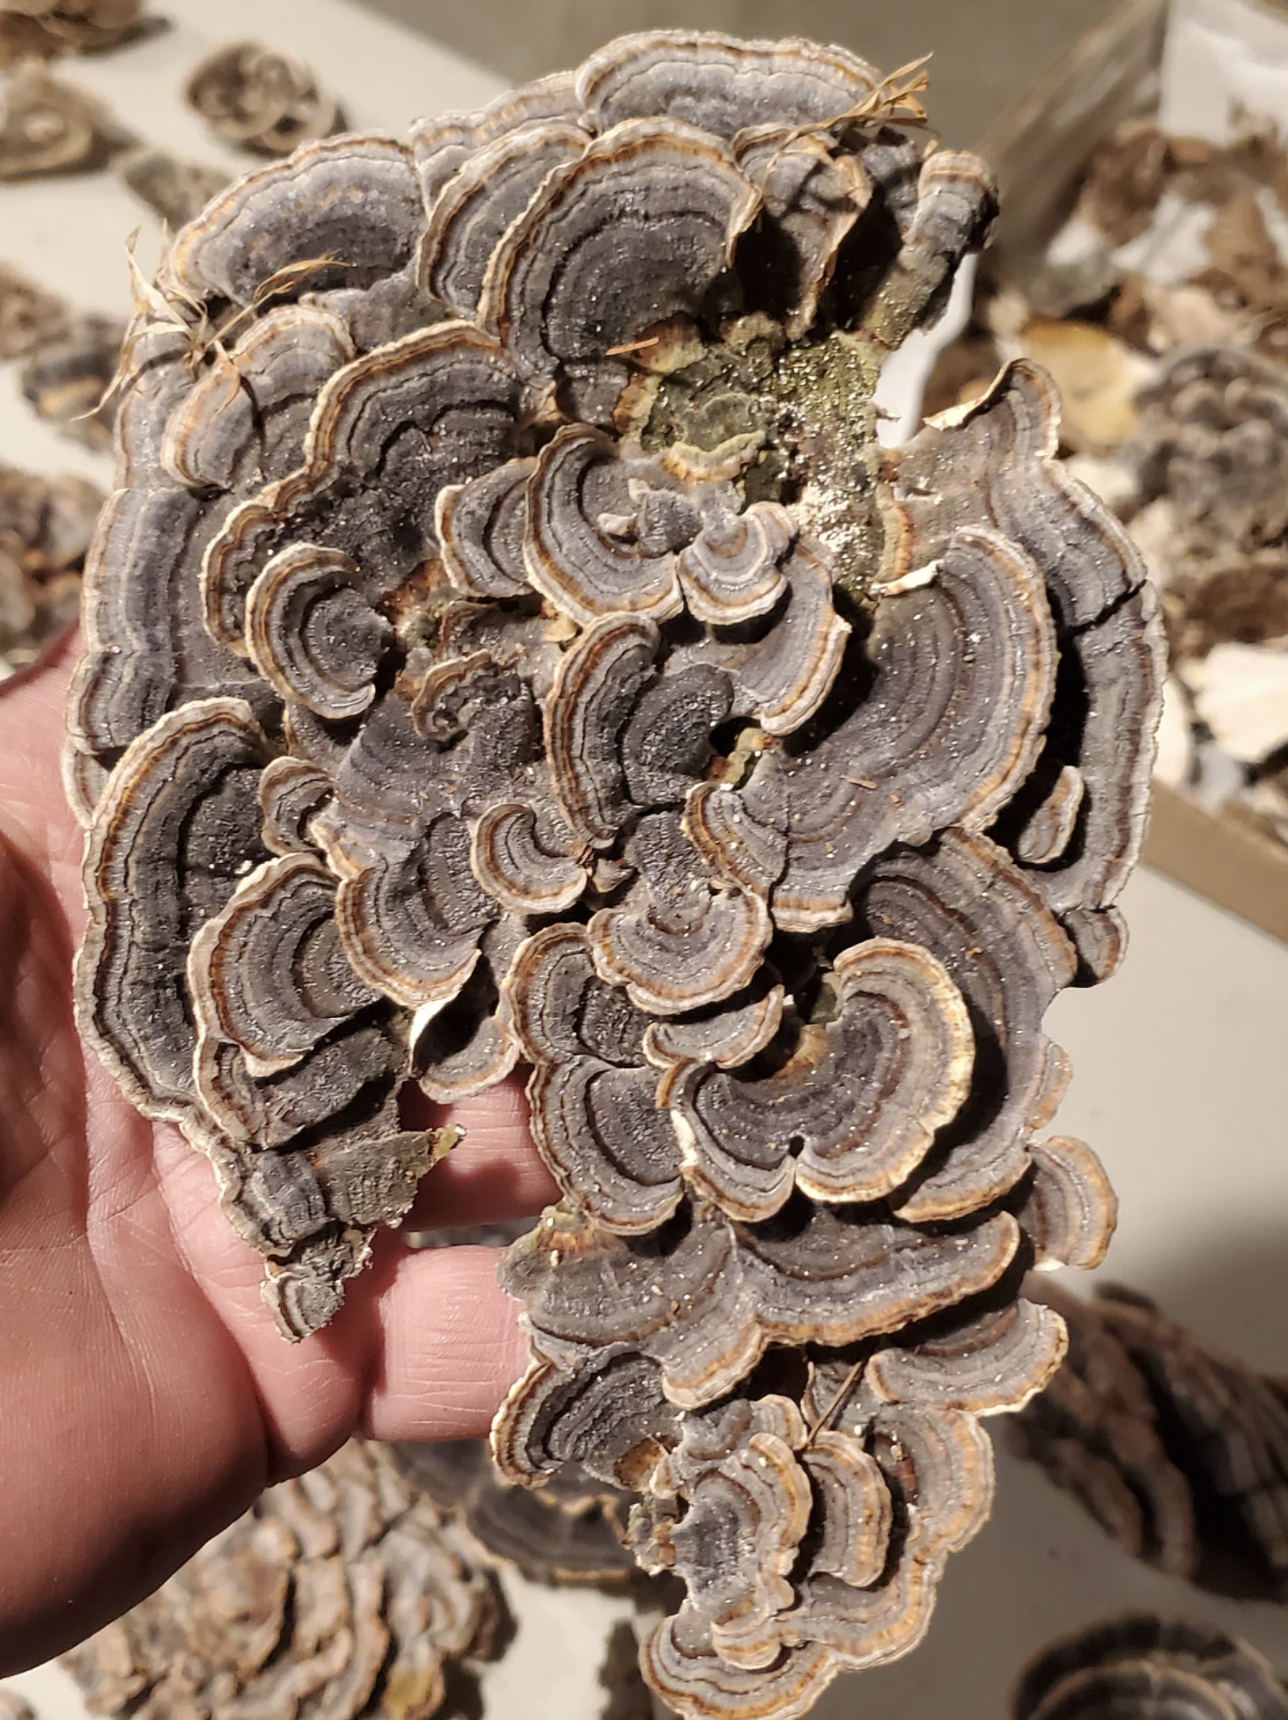 Turkey Tail Mushroom Dried Sustainably Wild harvested Whole Trametes Versicolor Yun Zhi alpha beta glucan